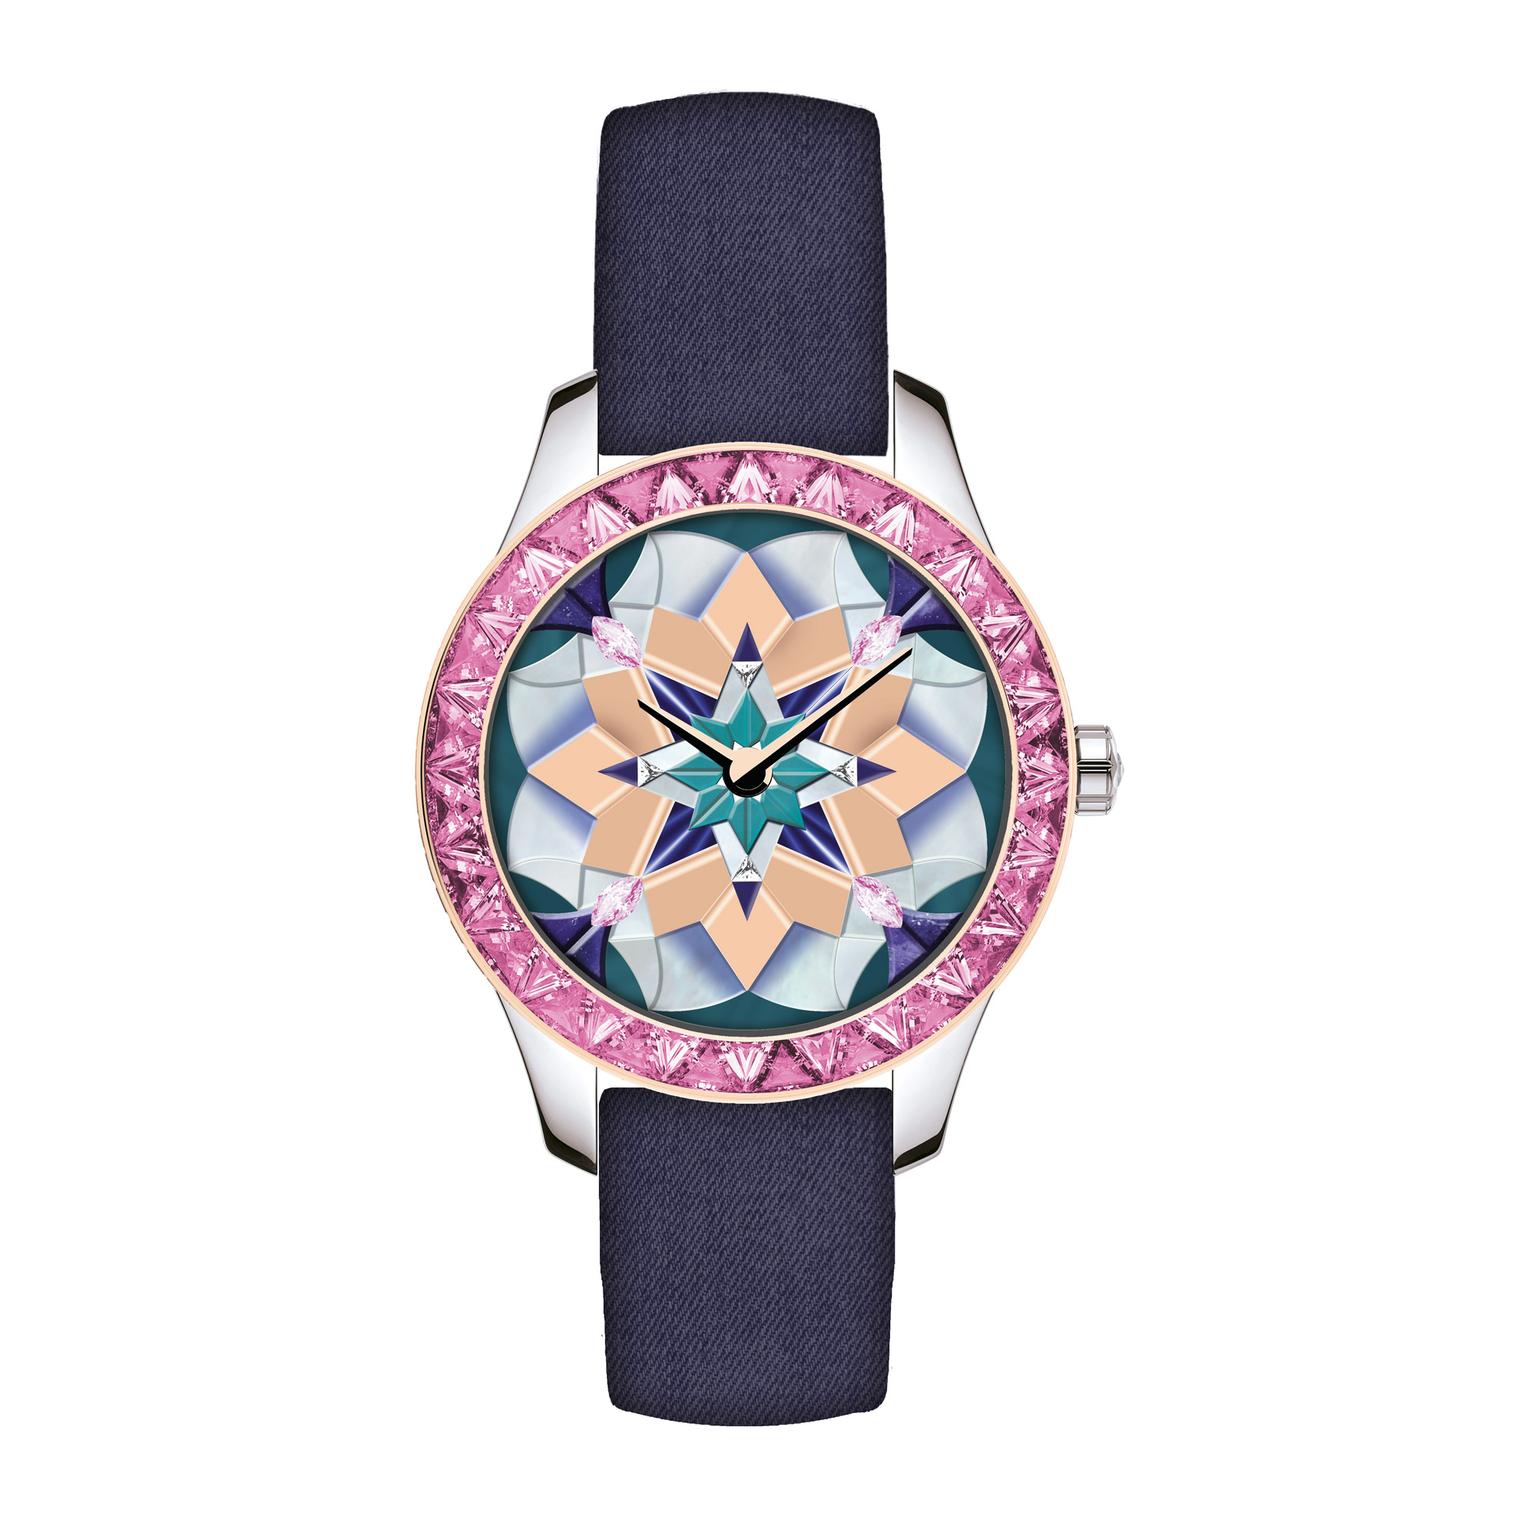 Dior Grand Soir KaleiDiorscope pink sapphire watch